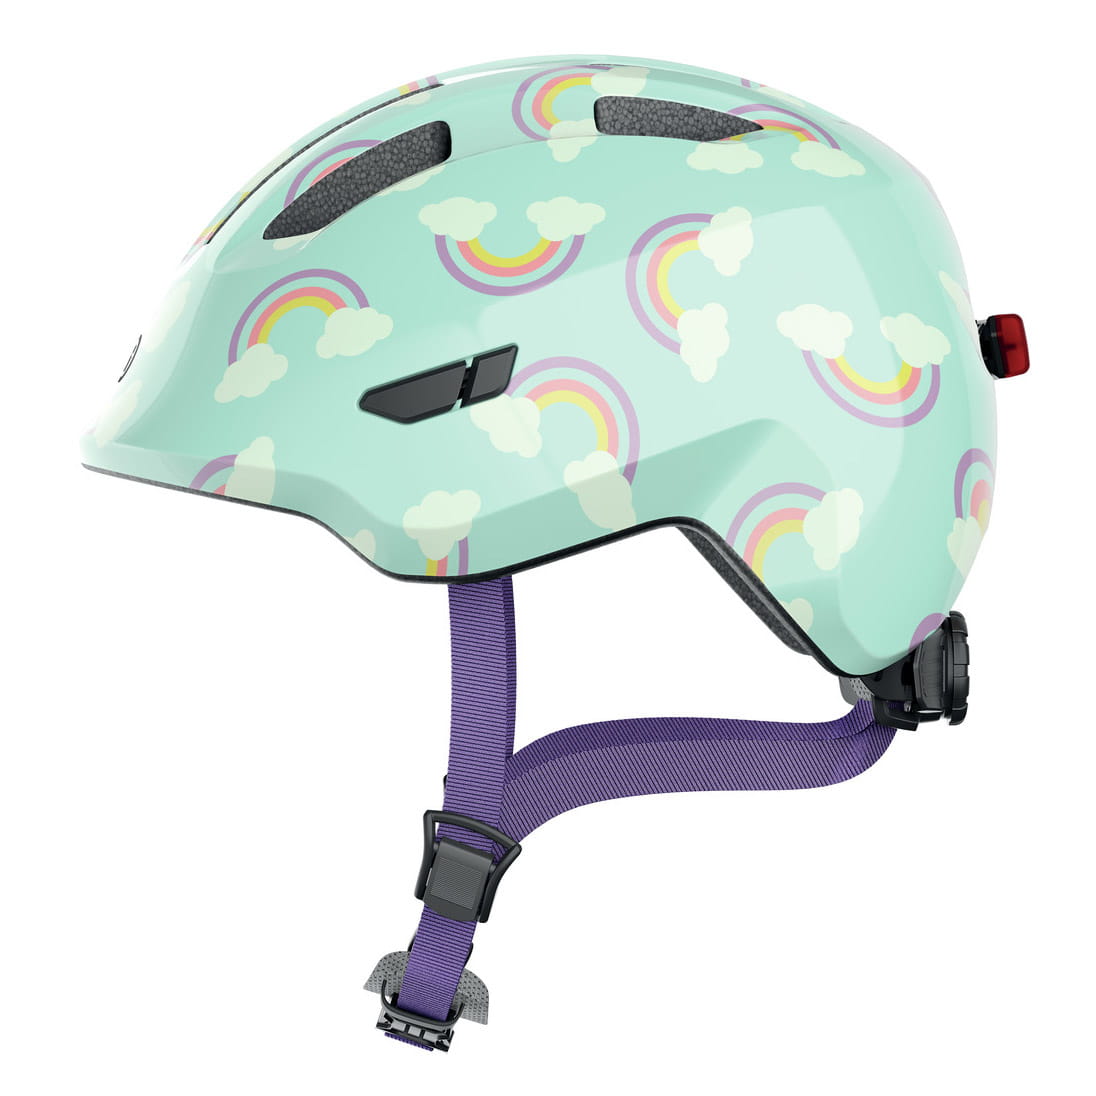 ABUS Smiley 3.0 Bike Helmet with LED